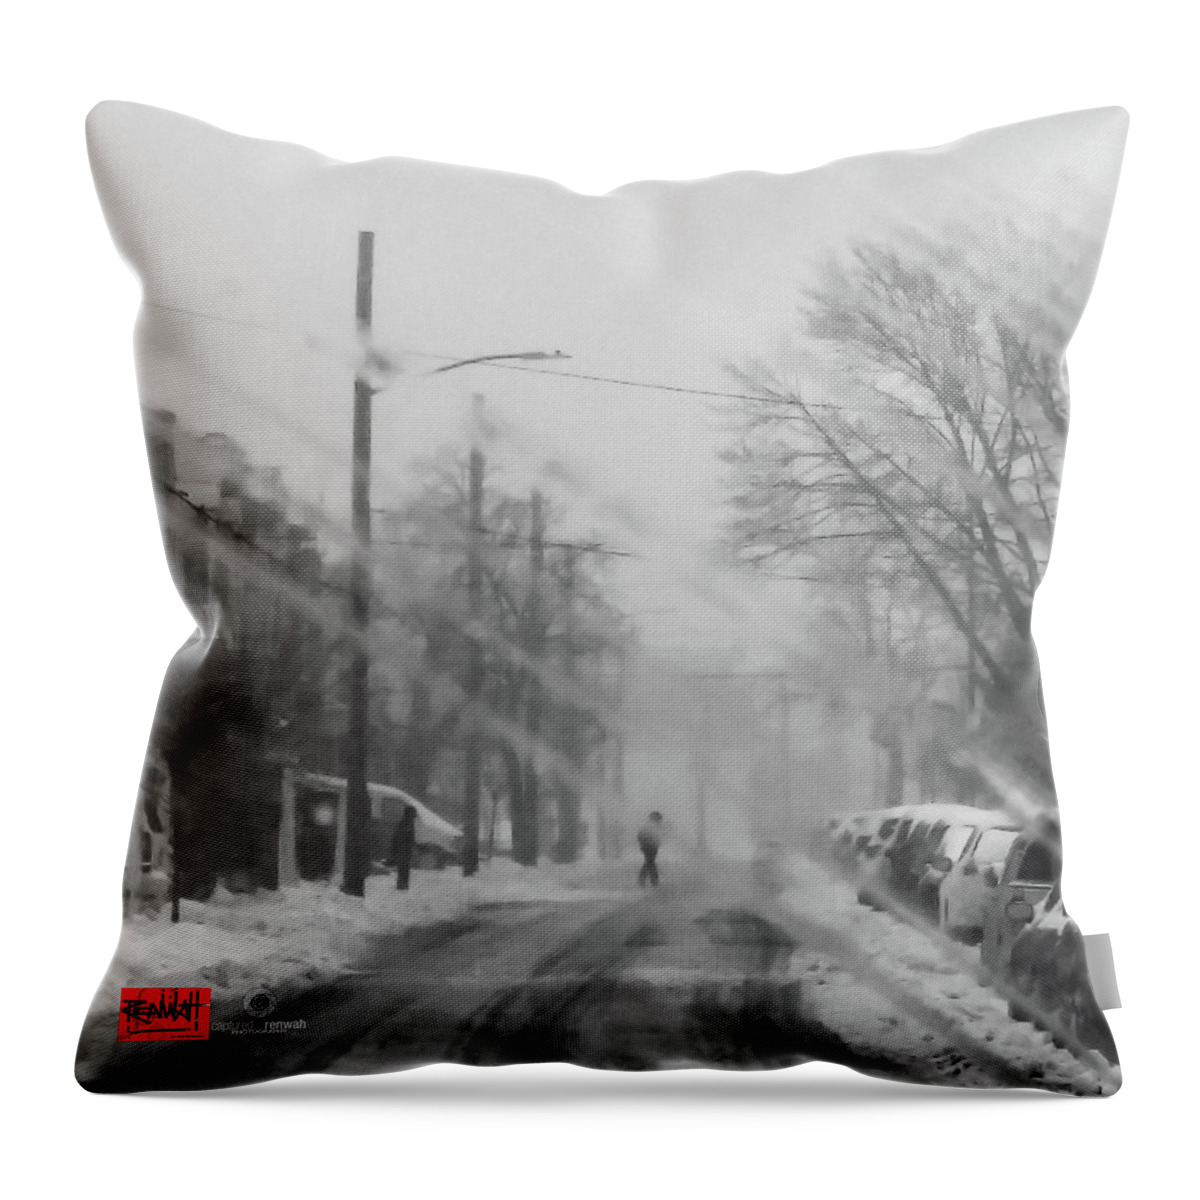  Throw Pillow featuring the photograph Fargo by Rennie RenWah